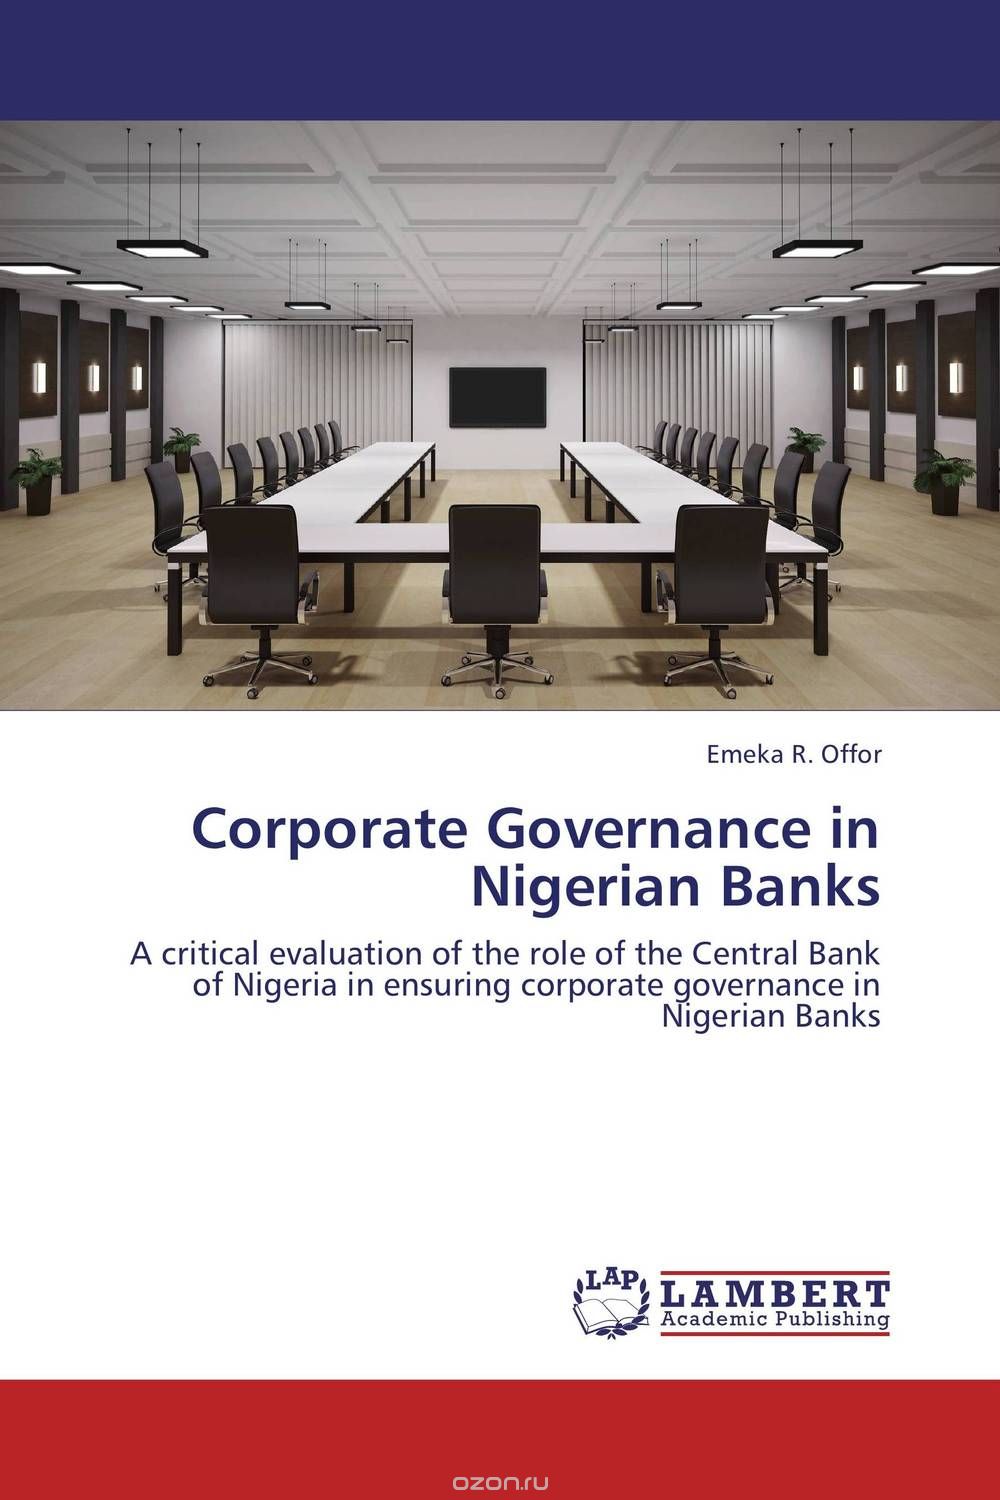 Скачать книгу "Corporate Governance in Nigerian Banks"